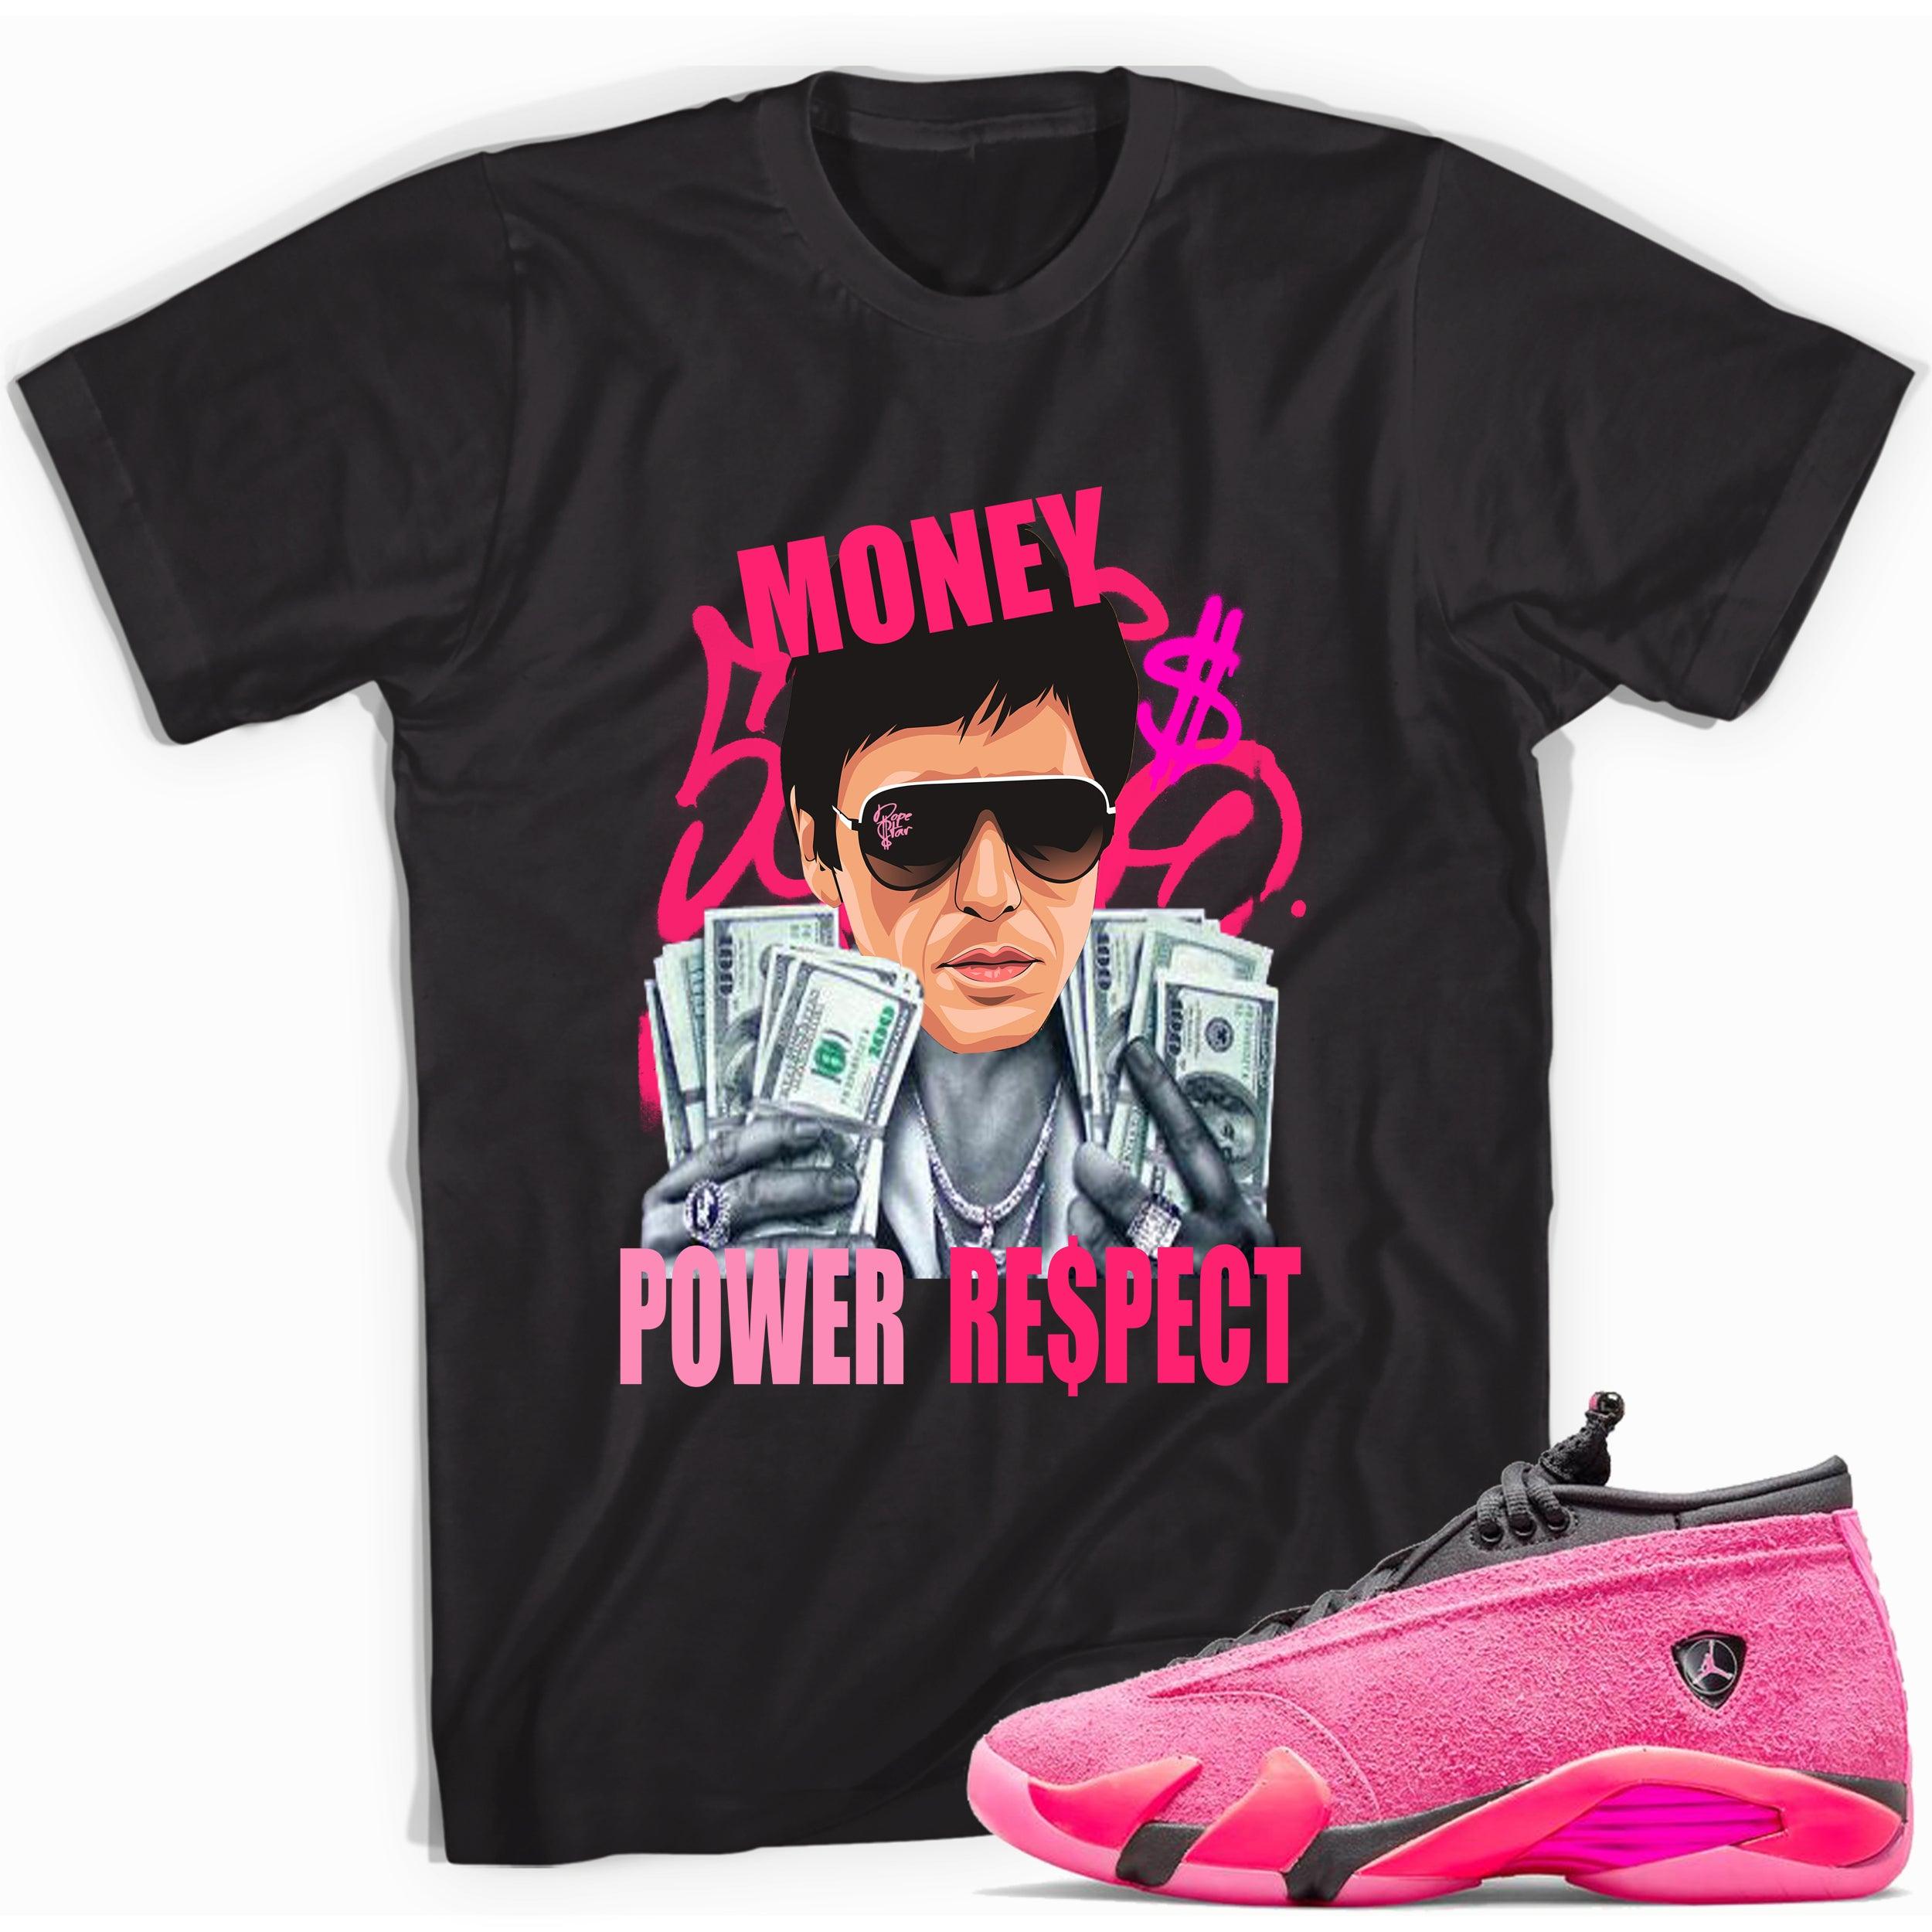 Tony Montana Shirt AJ 14s Low Shocking Pink photo